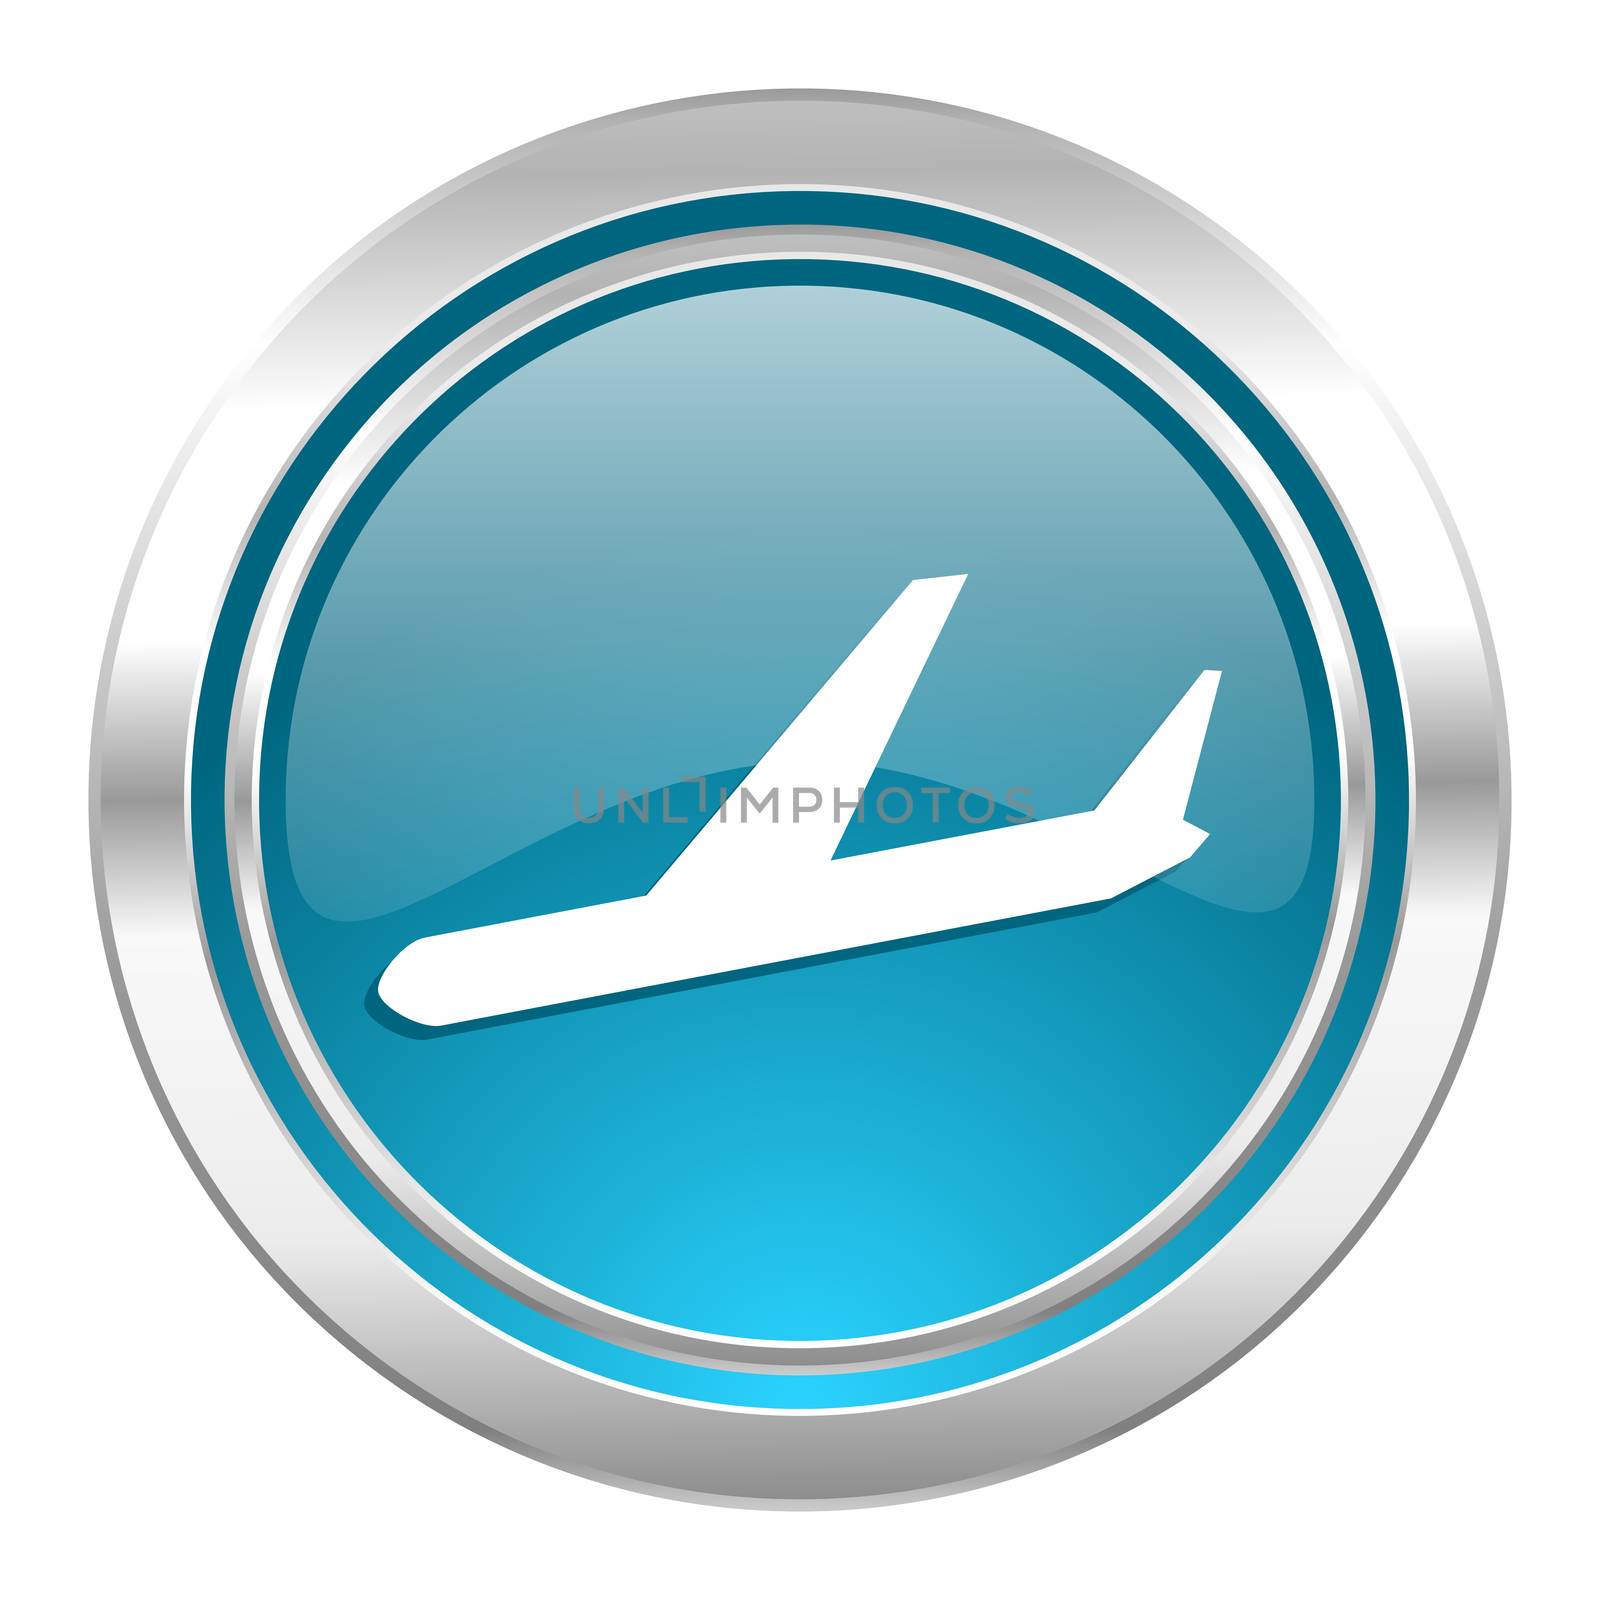 arrivals icon, plane sign by alexwhite